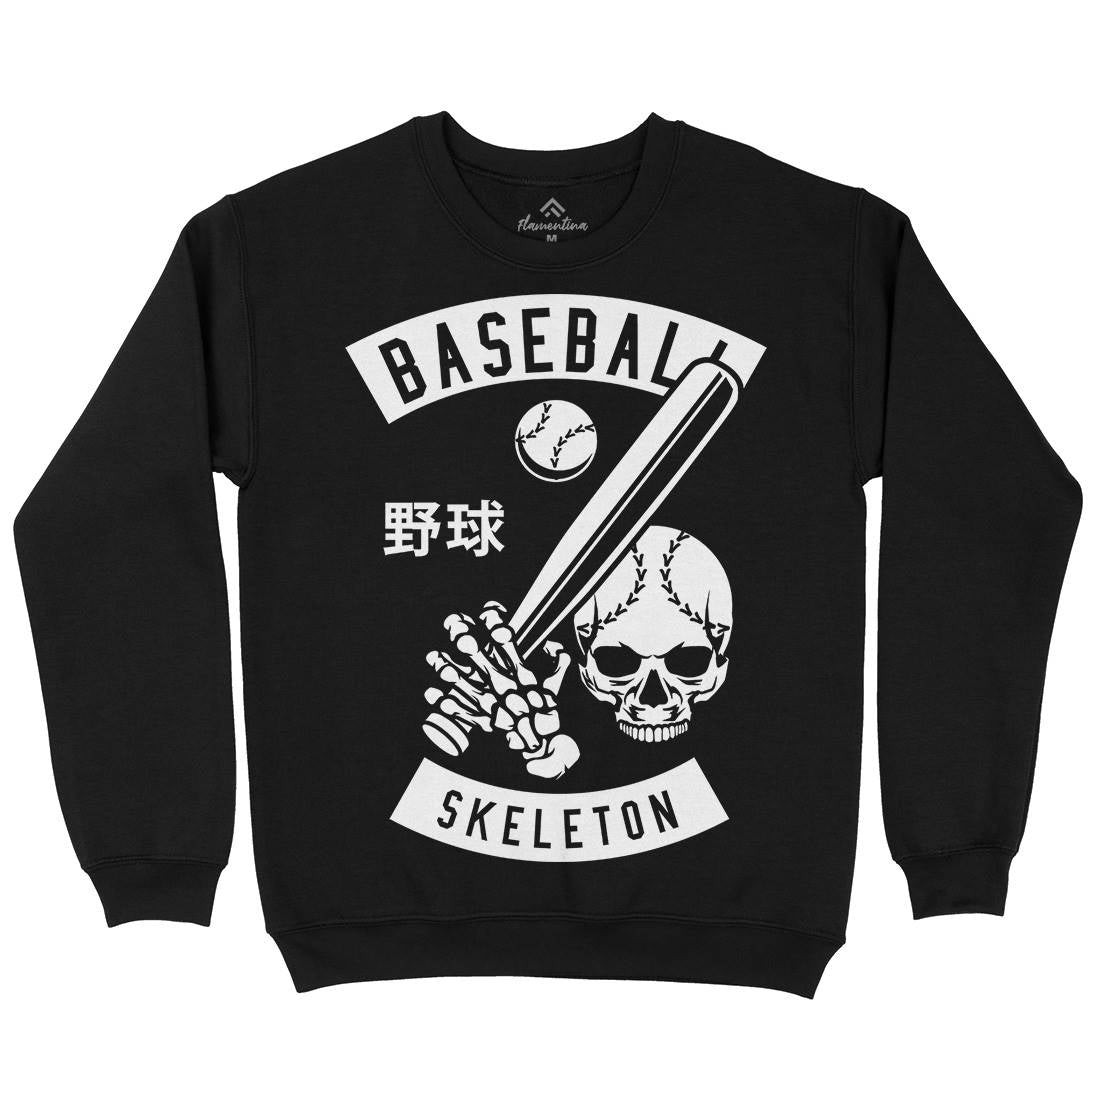 Baseball Skeleton Kids Crew Neck Sweatshirt Sport B489